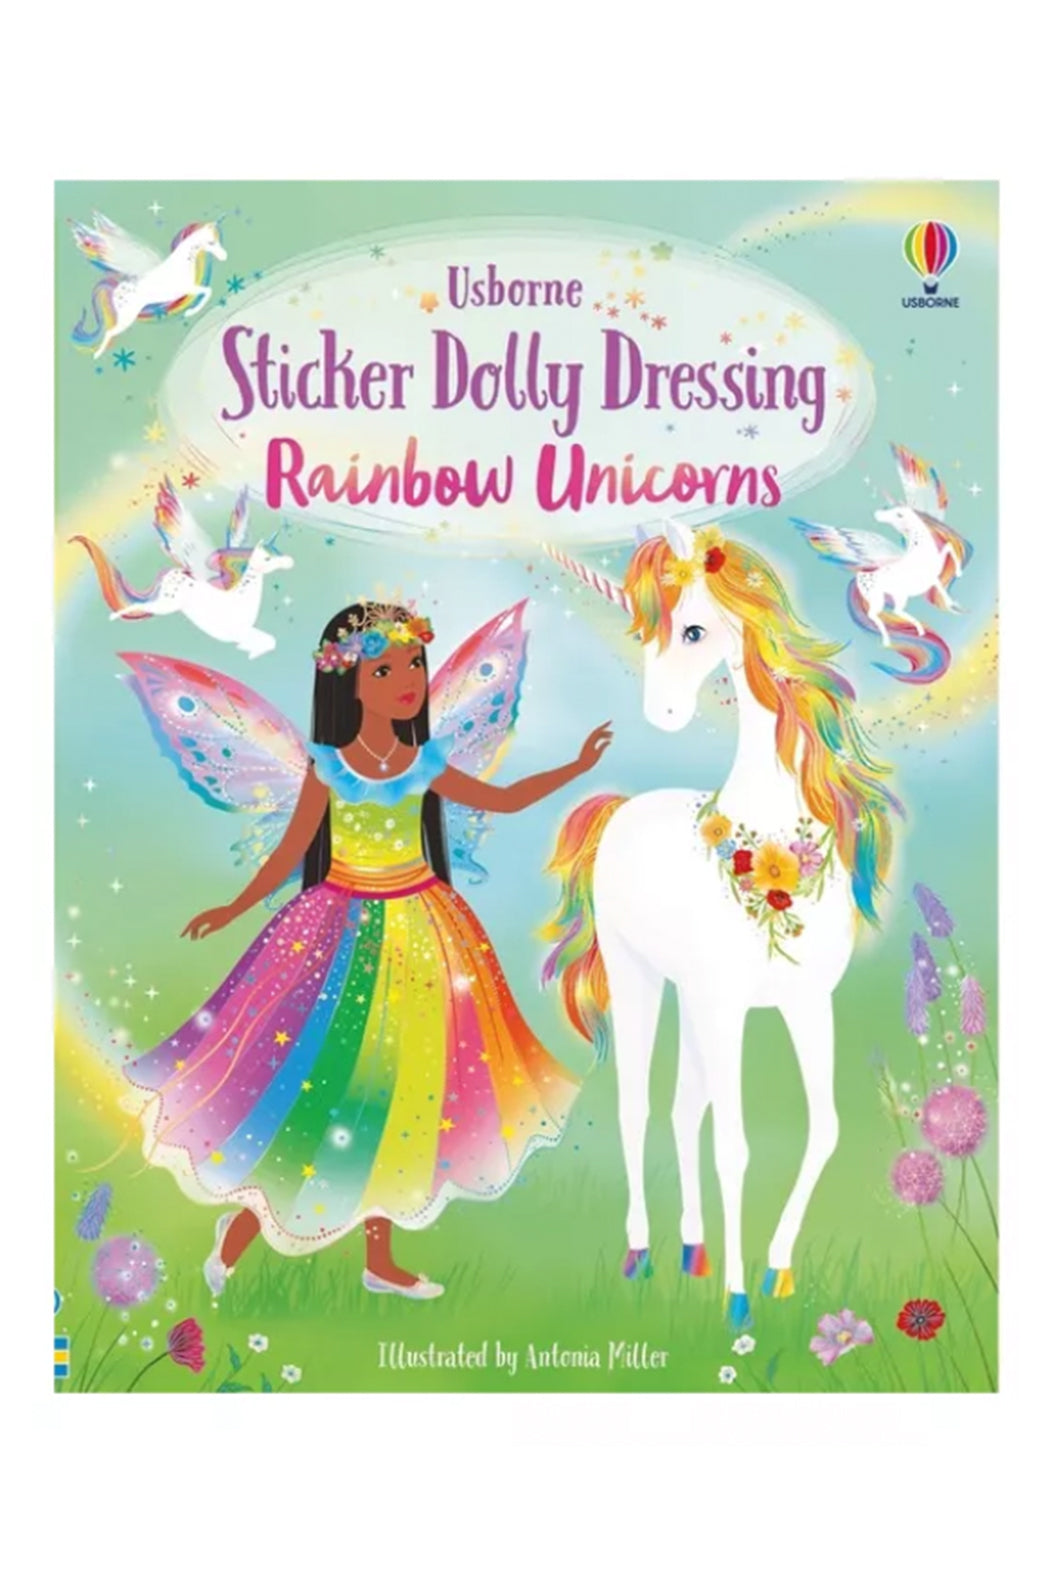 Usborne Sticker Dolly Dressing: Rainbow Unicorns